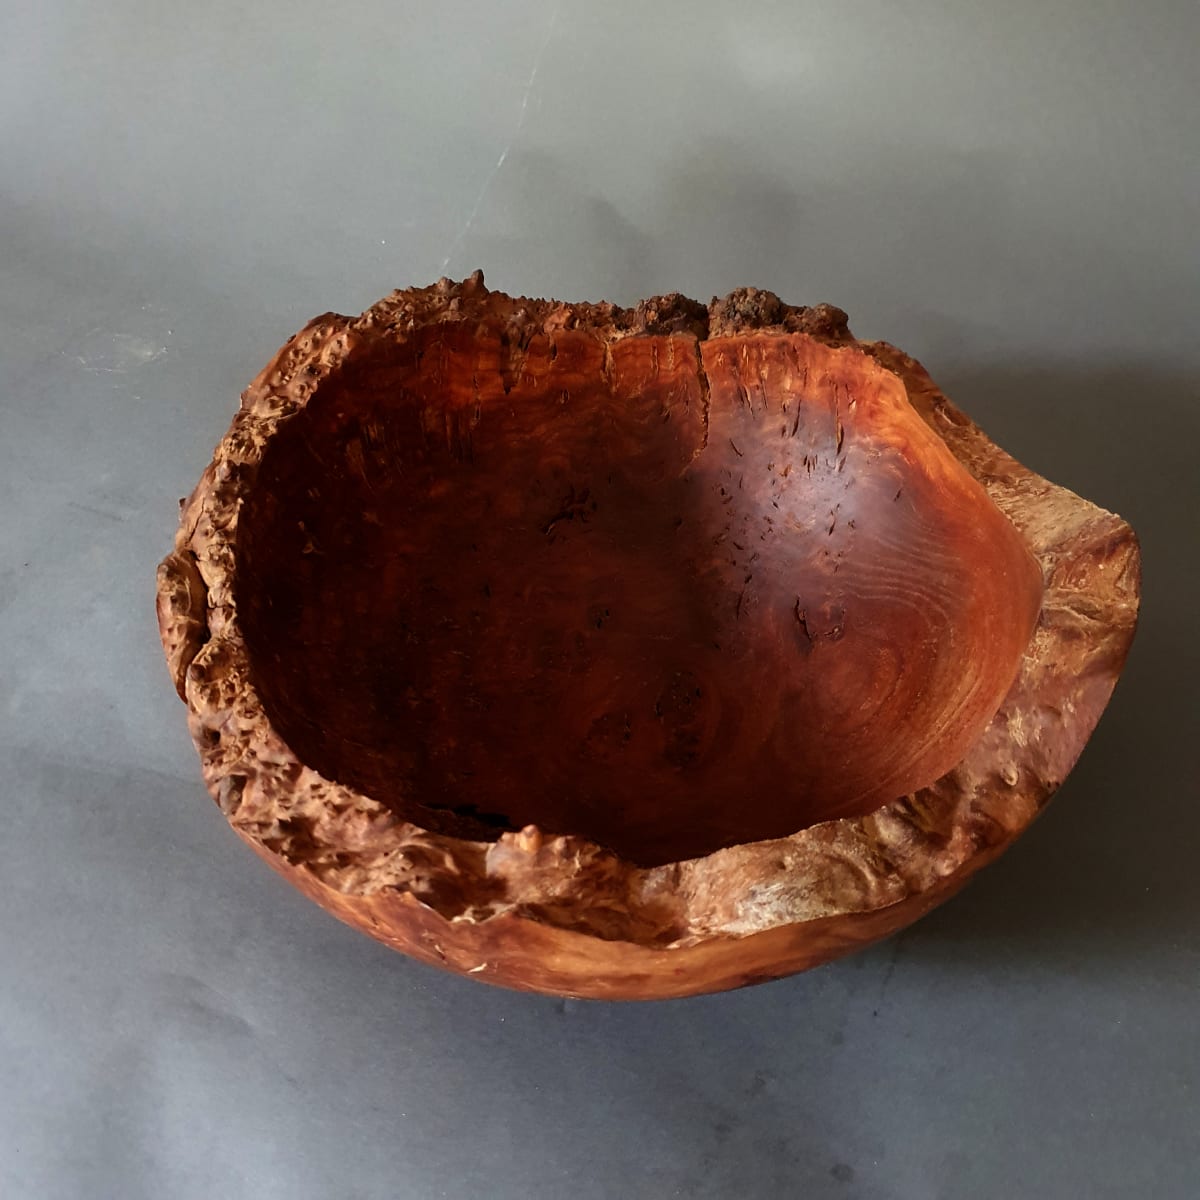 Burr elm bowl 2020_5 by Simon King 